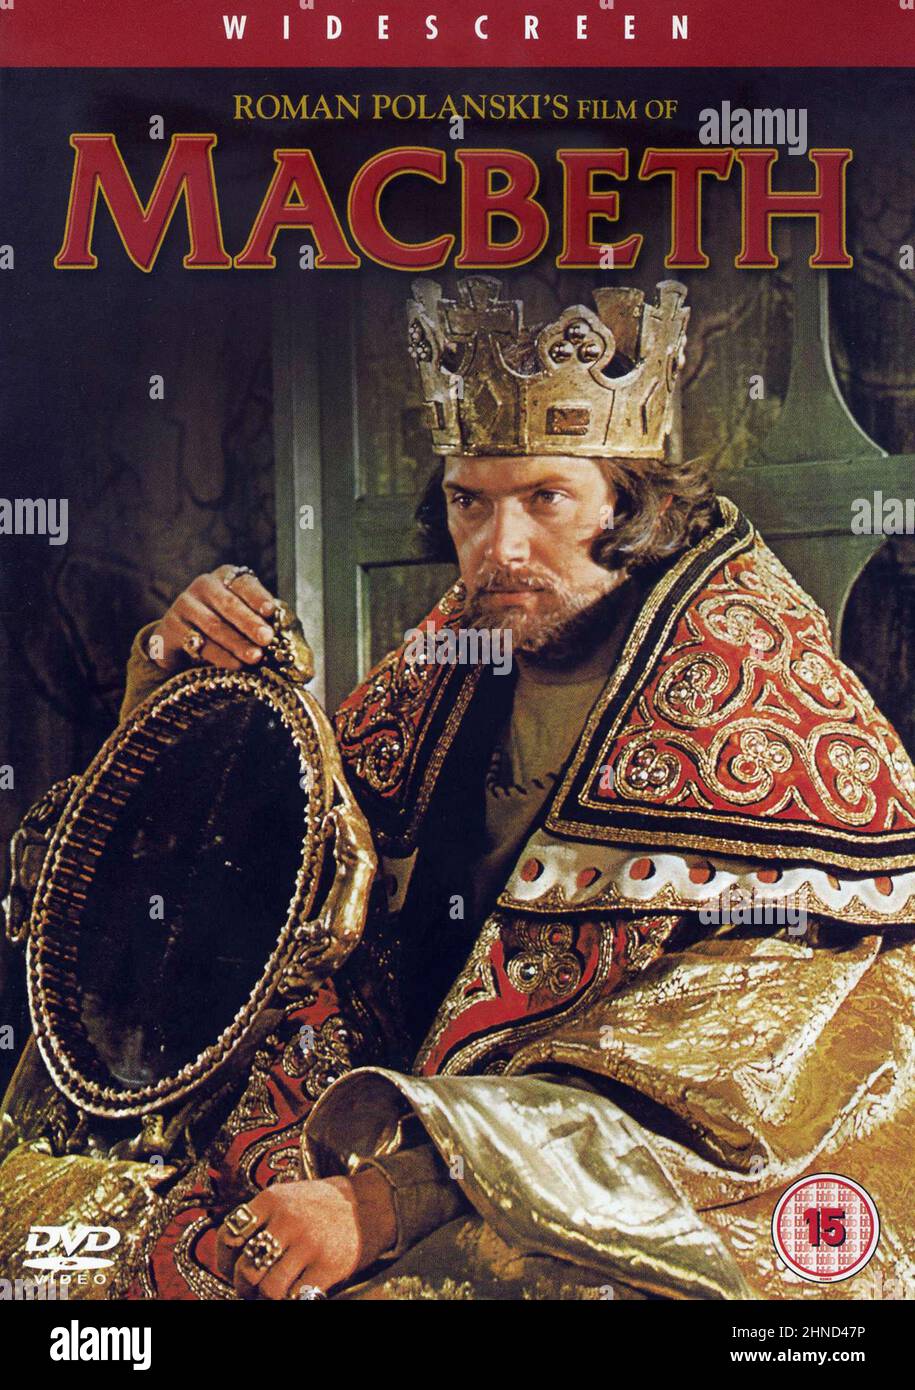 DVD Cover. 'Macbeth' by William Shakespeare. Roman Polanski. Stock Photo